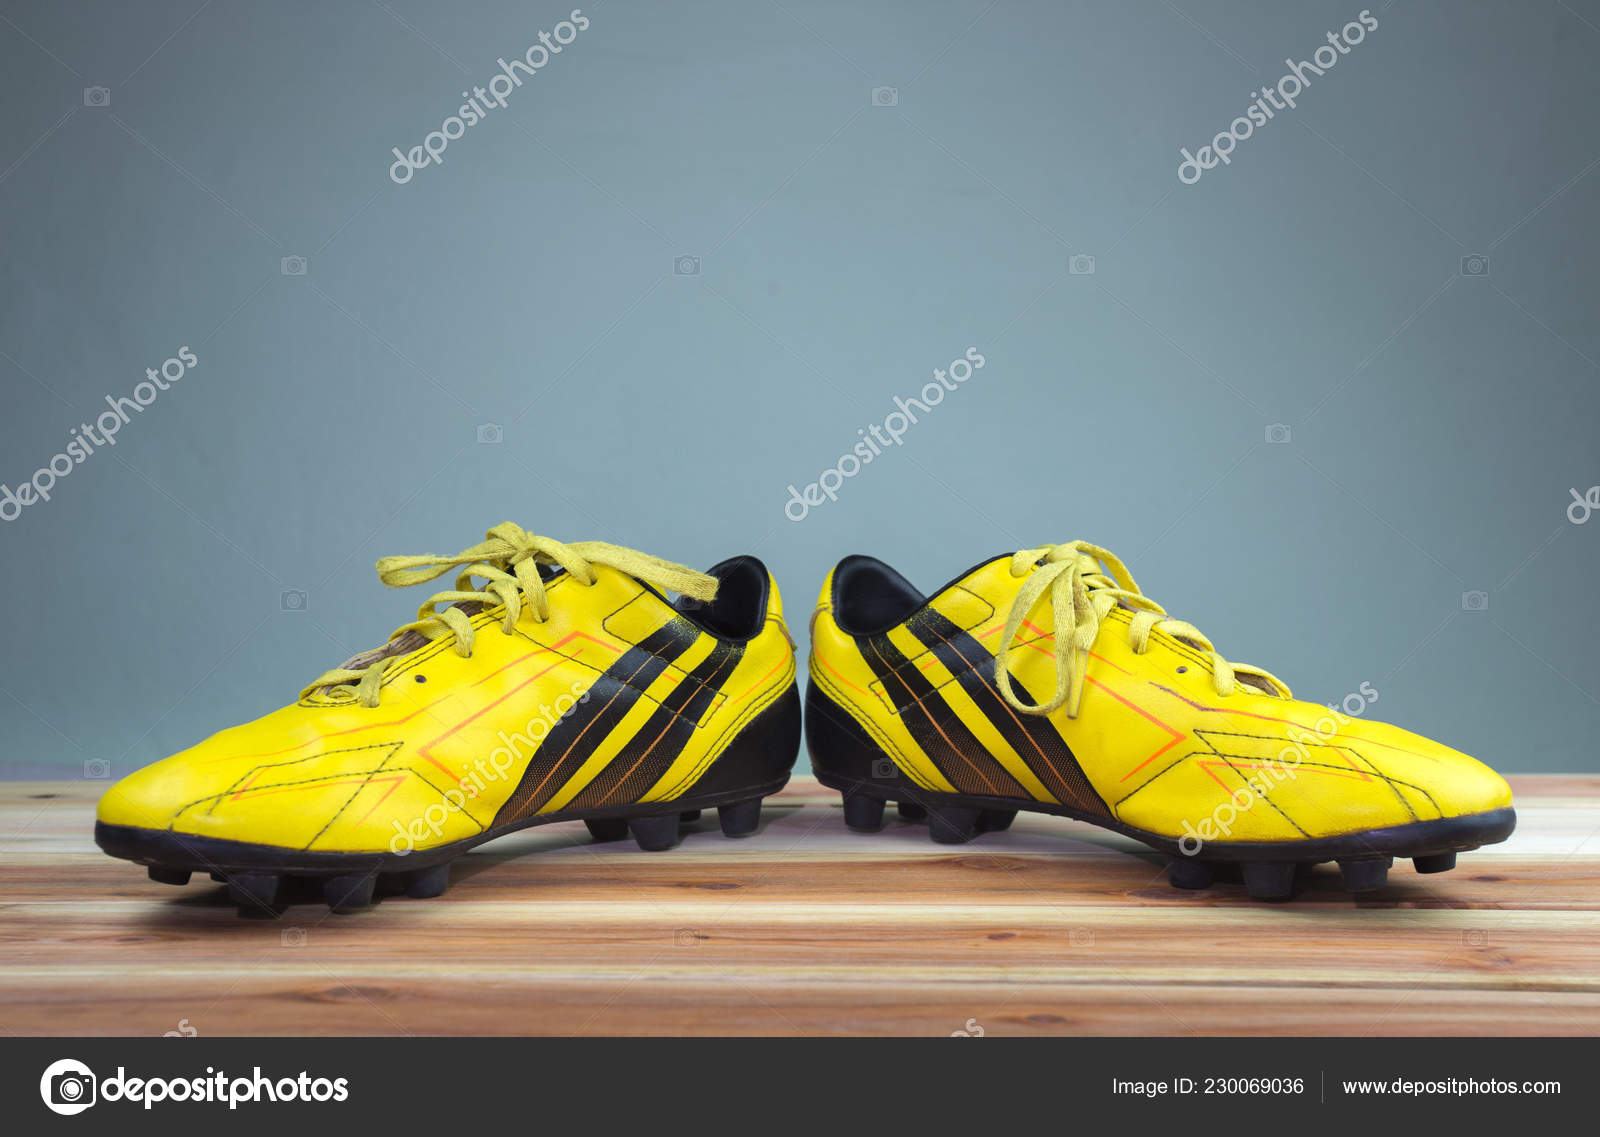 light football shoes